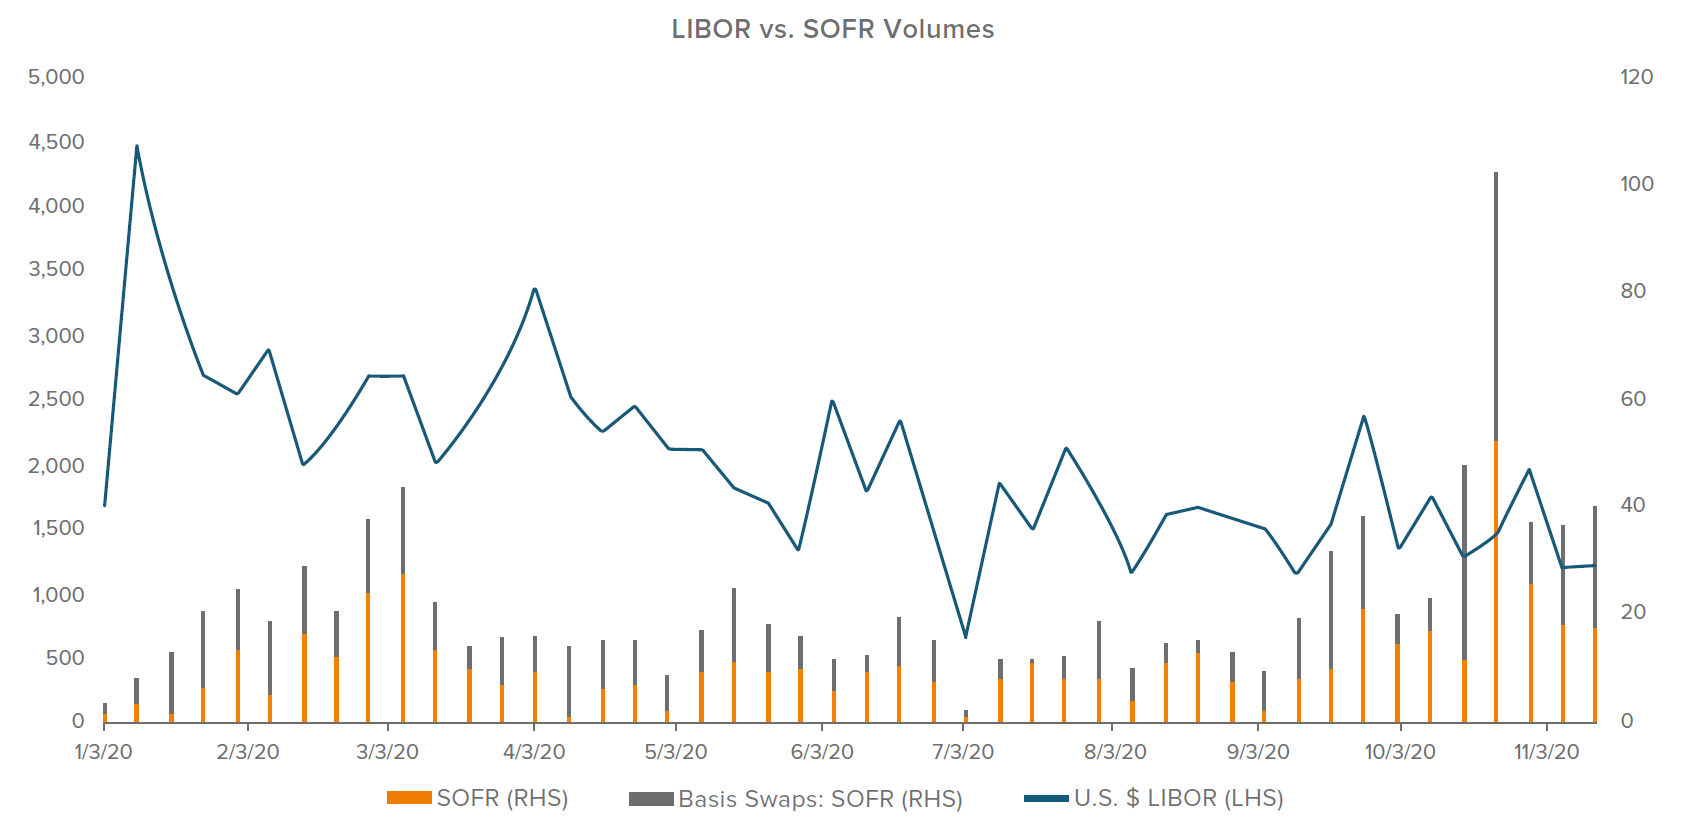 Figure 1. SOFR Volumes are Trending Upward as LIBOR Volumes Decrease